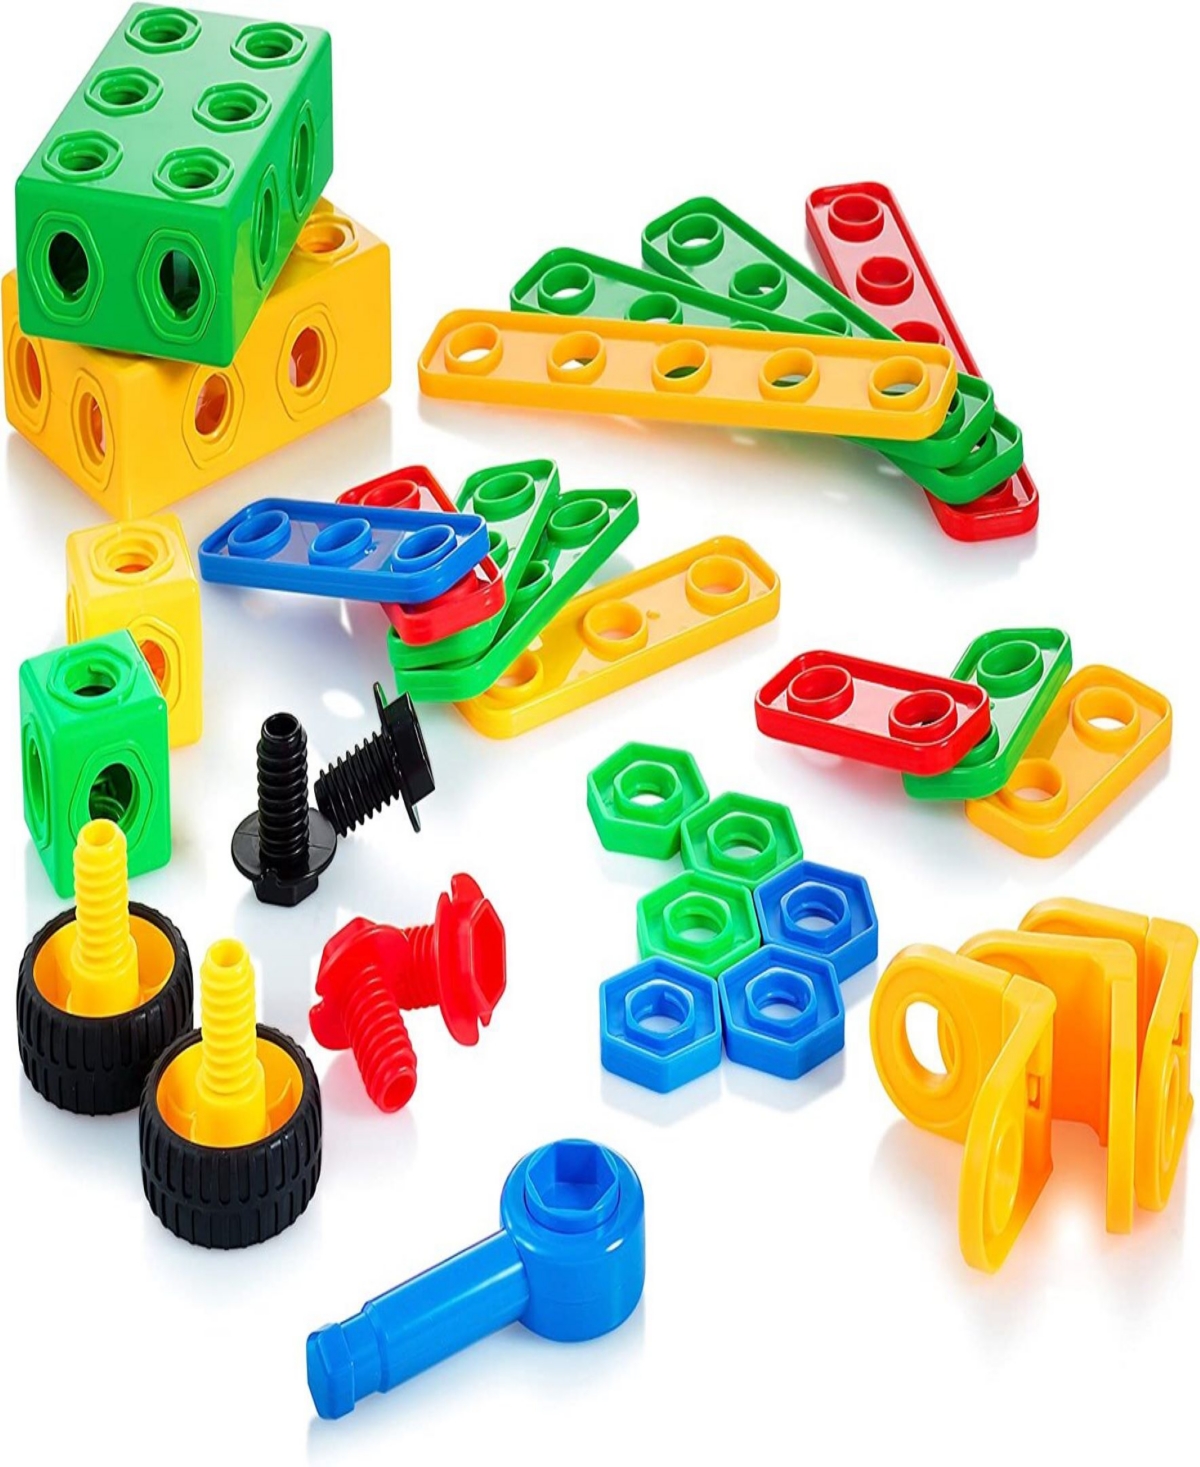 Play22 Babies' Keyboard Piano Building Blocks 104 Piece Set, Stem Educational Fun Toy Set In Multicolor